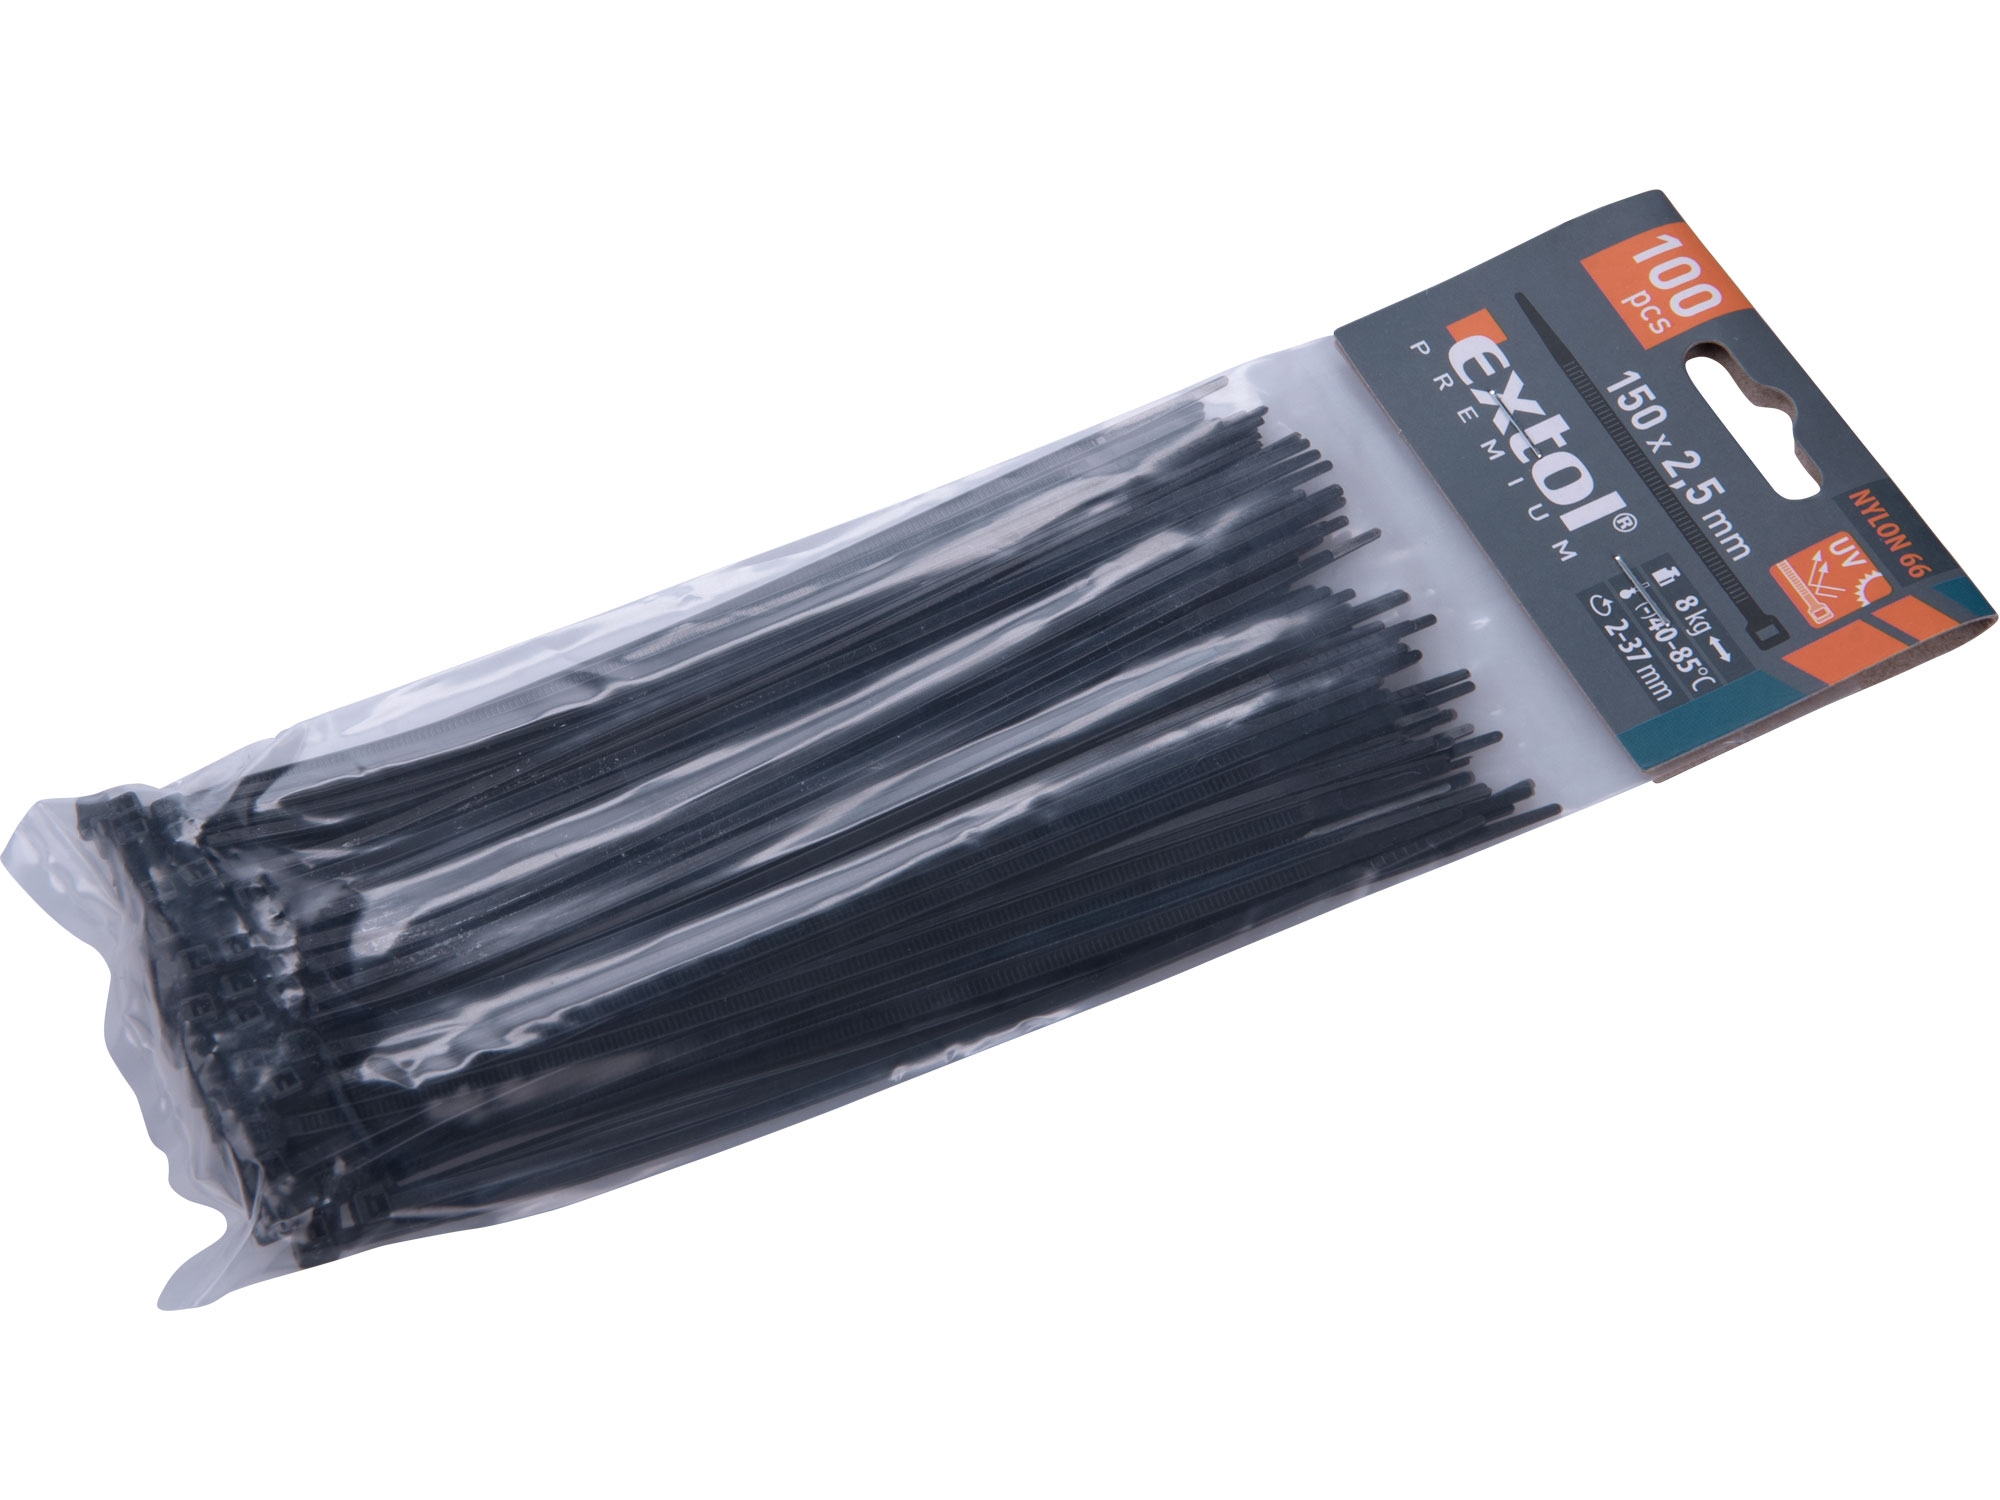 pásky stahovací černé, 150x2,5mm, 100ks, nylon, EXTOL PREMIUM 8856154